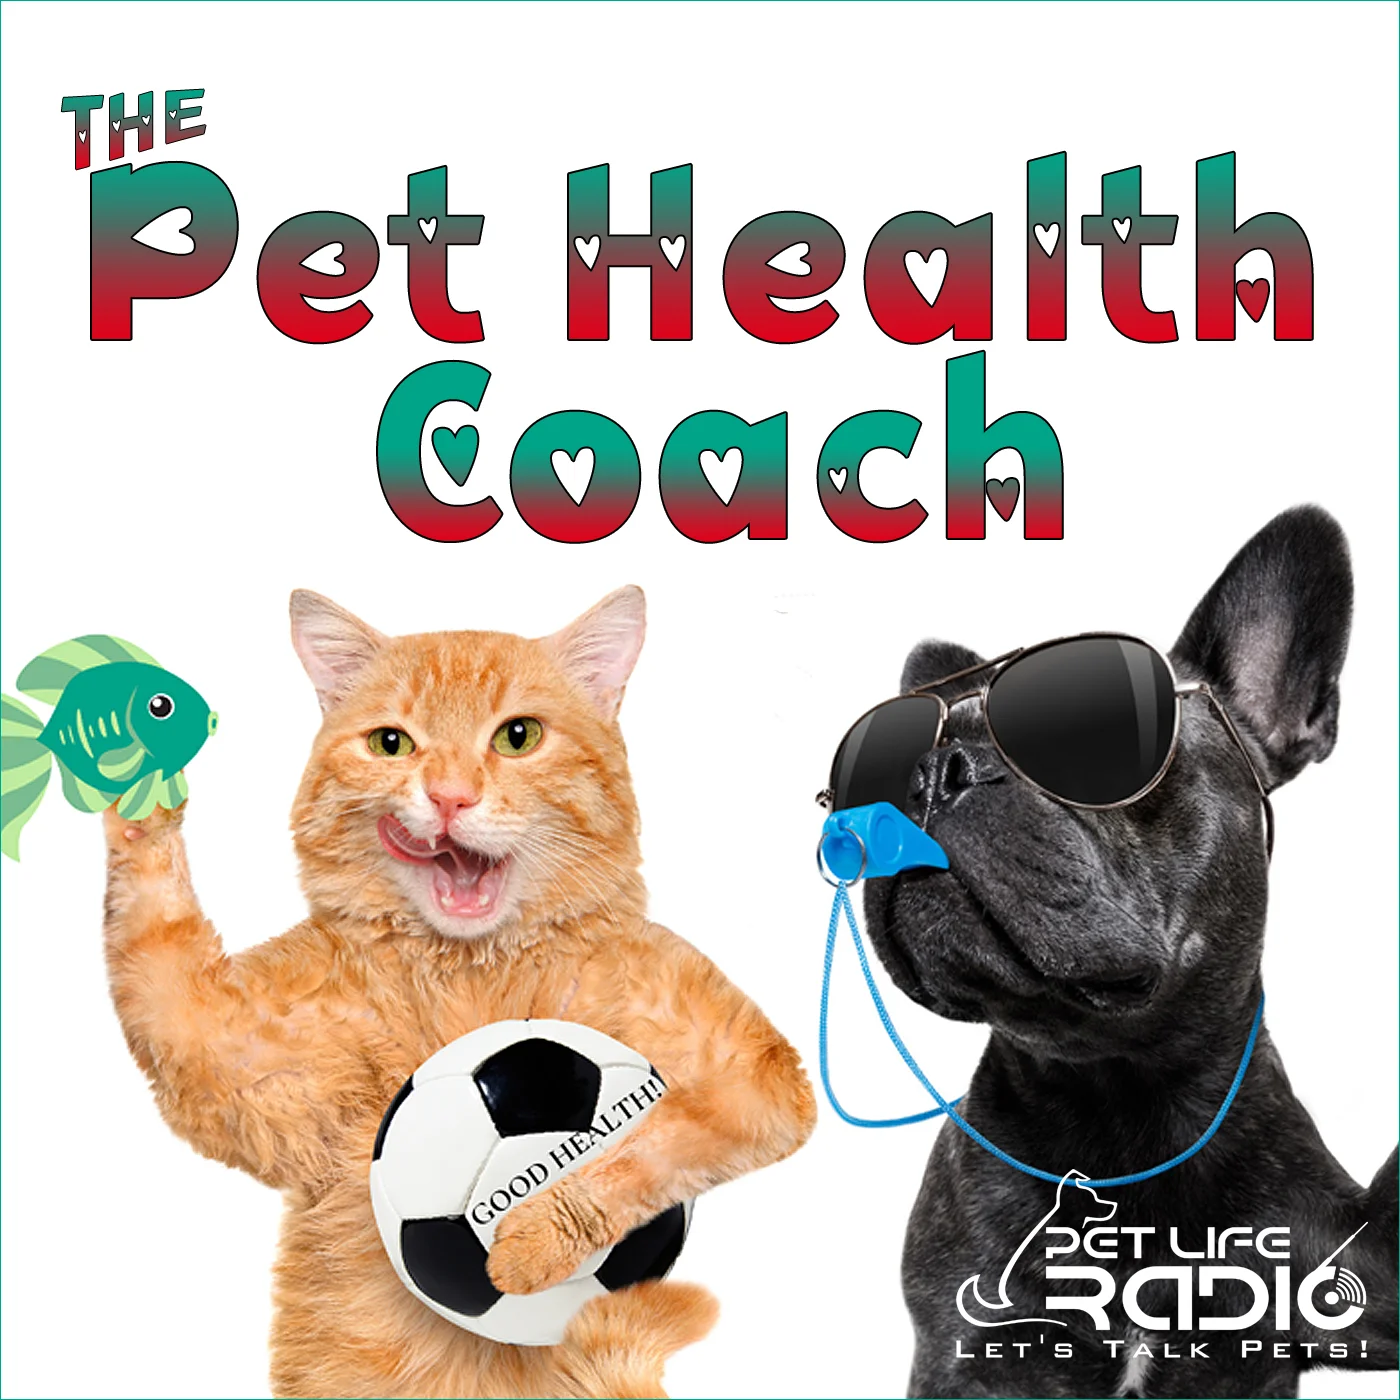 The Pet Health Coach on Pet Life Radio